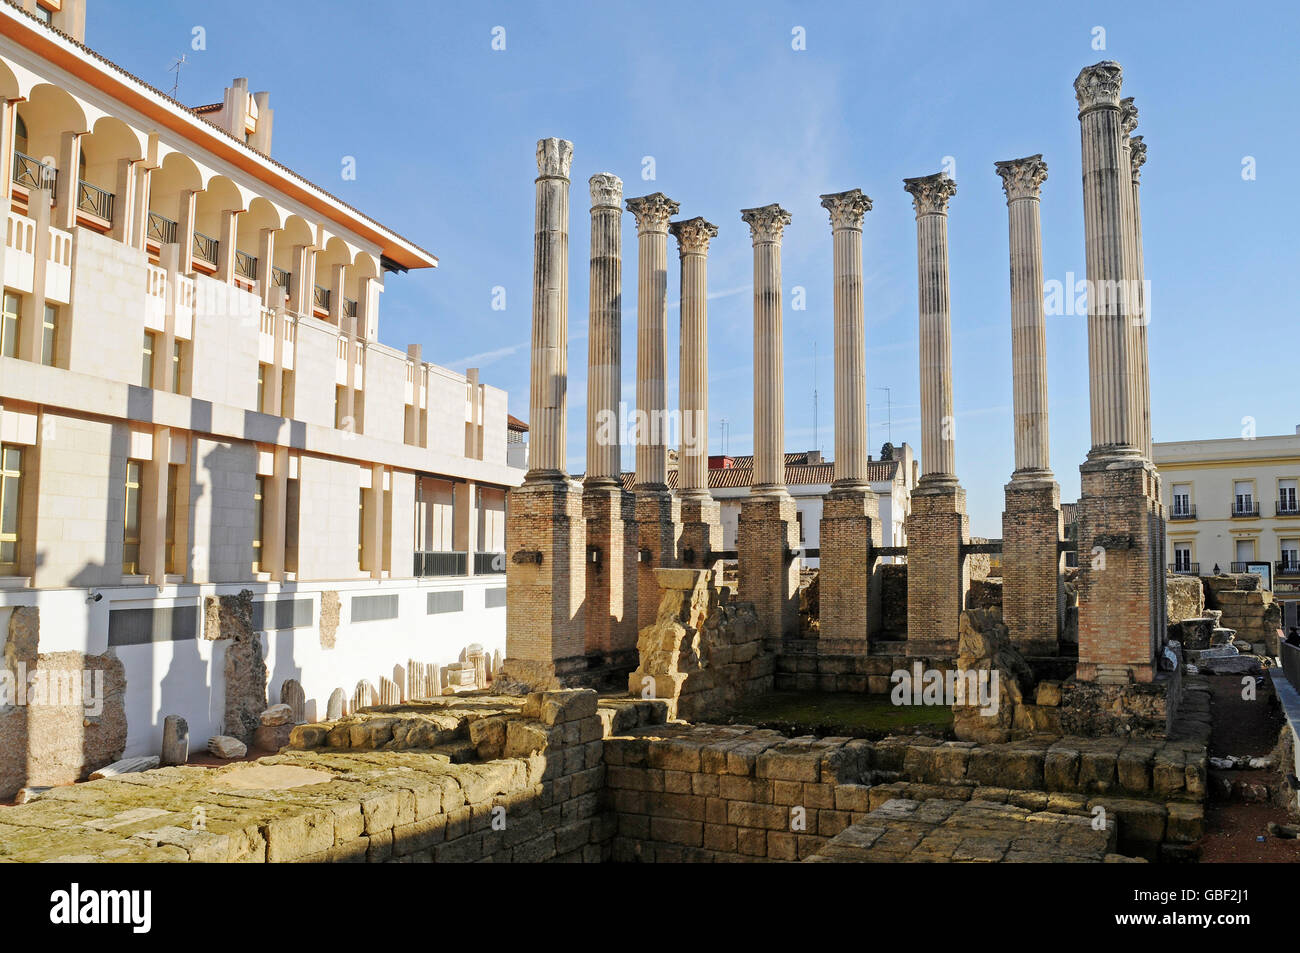 Templo Romano, Roman temple, ruins, columns, Cordoba, Cordoba province, Andalucia, Spain, Europe Stock Photo